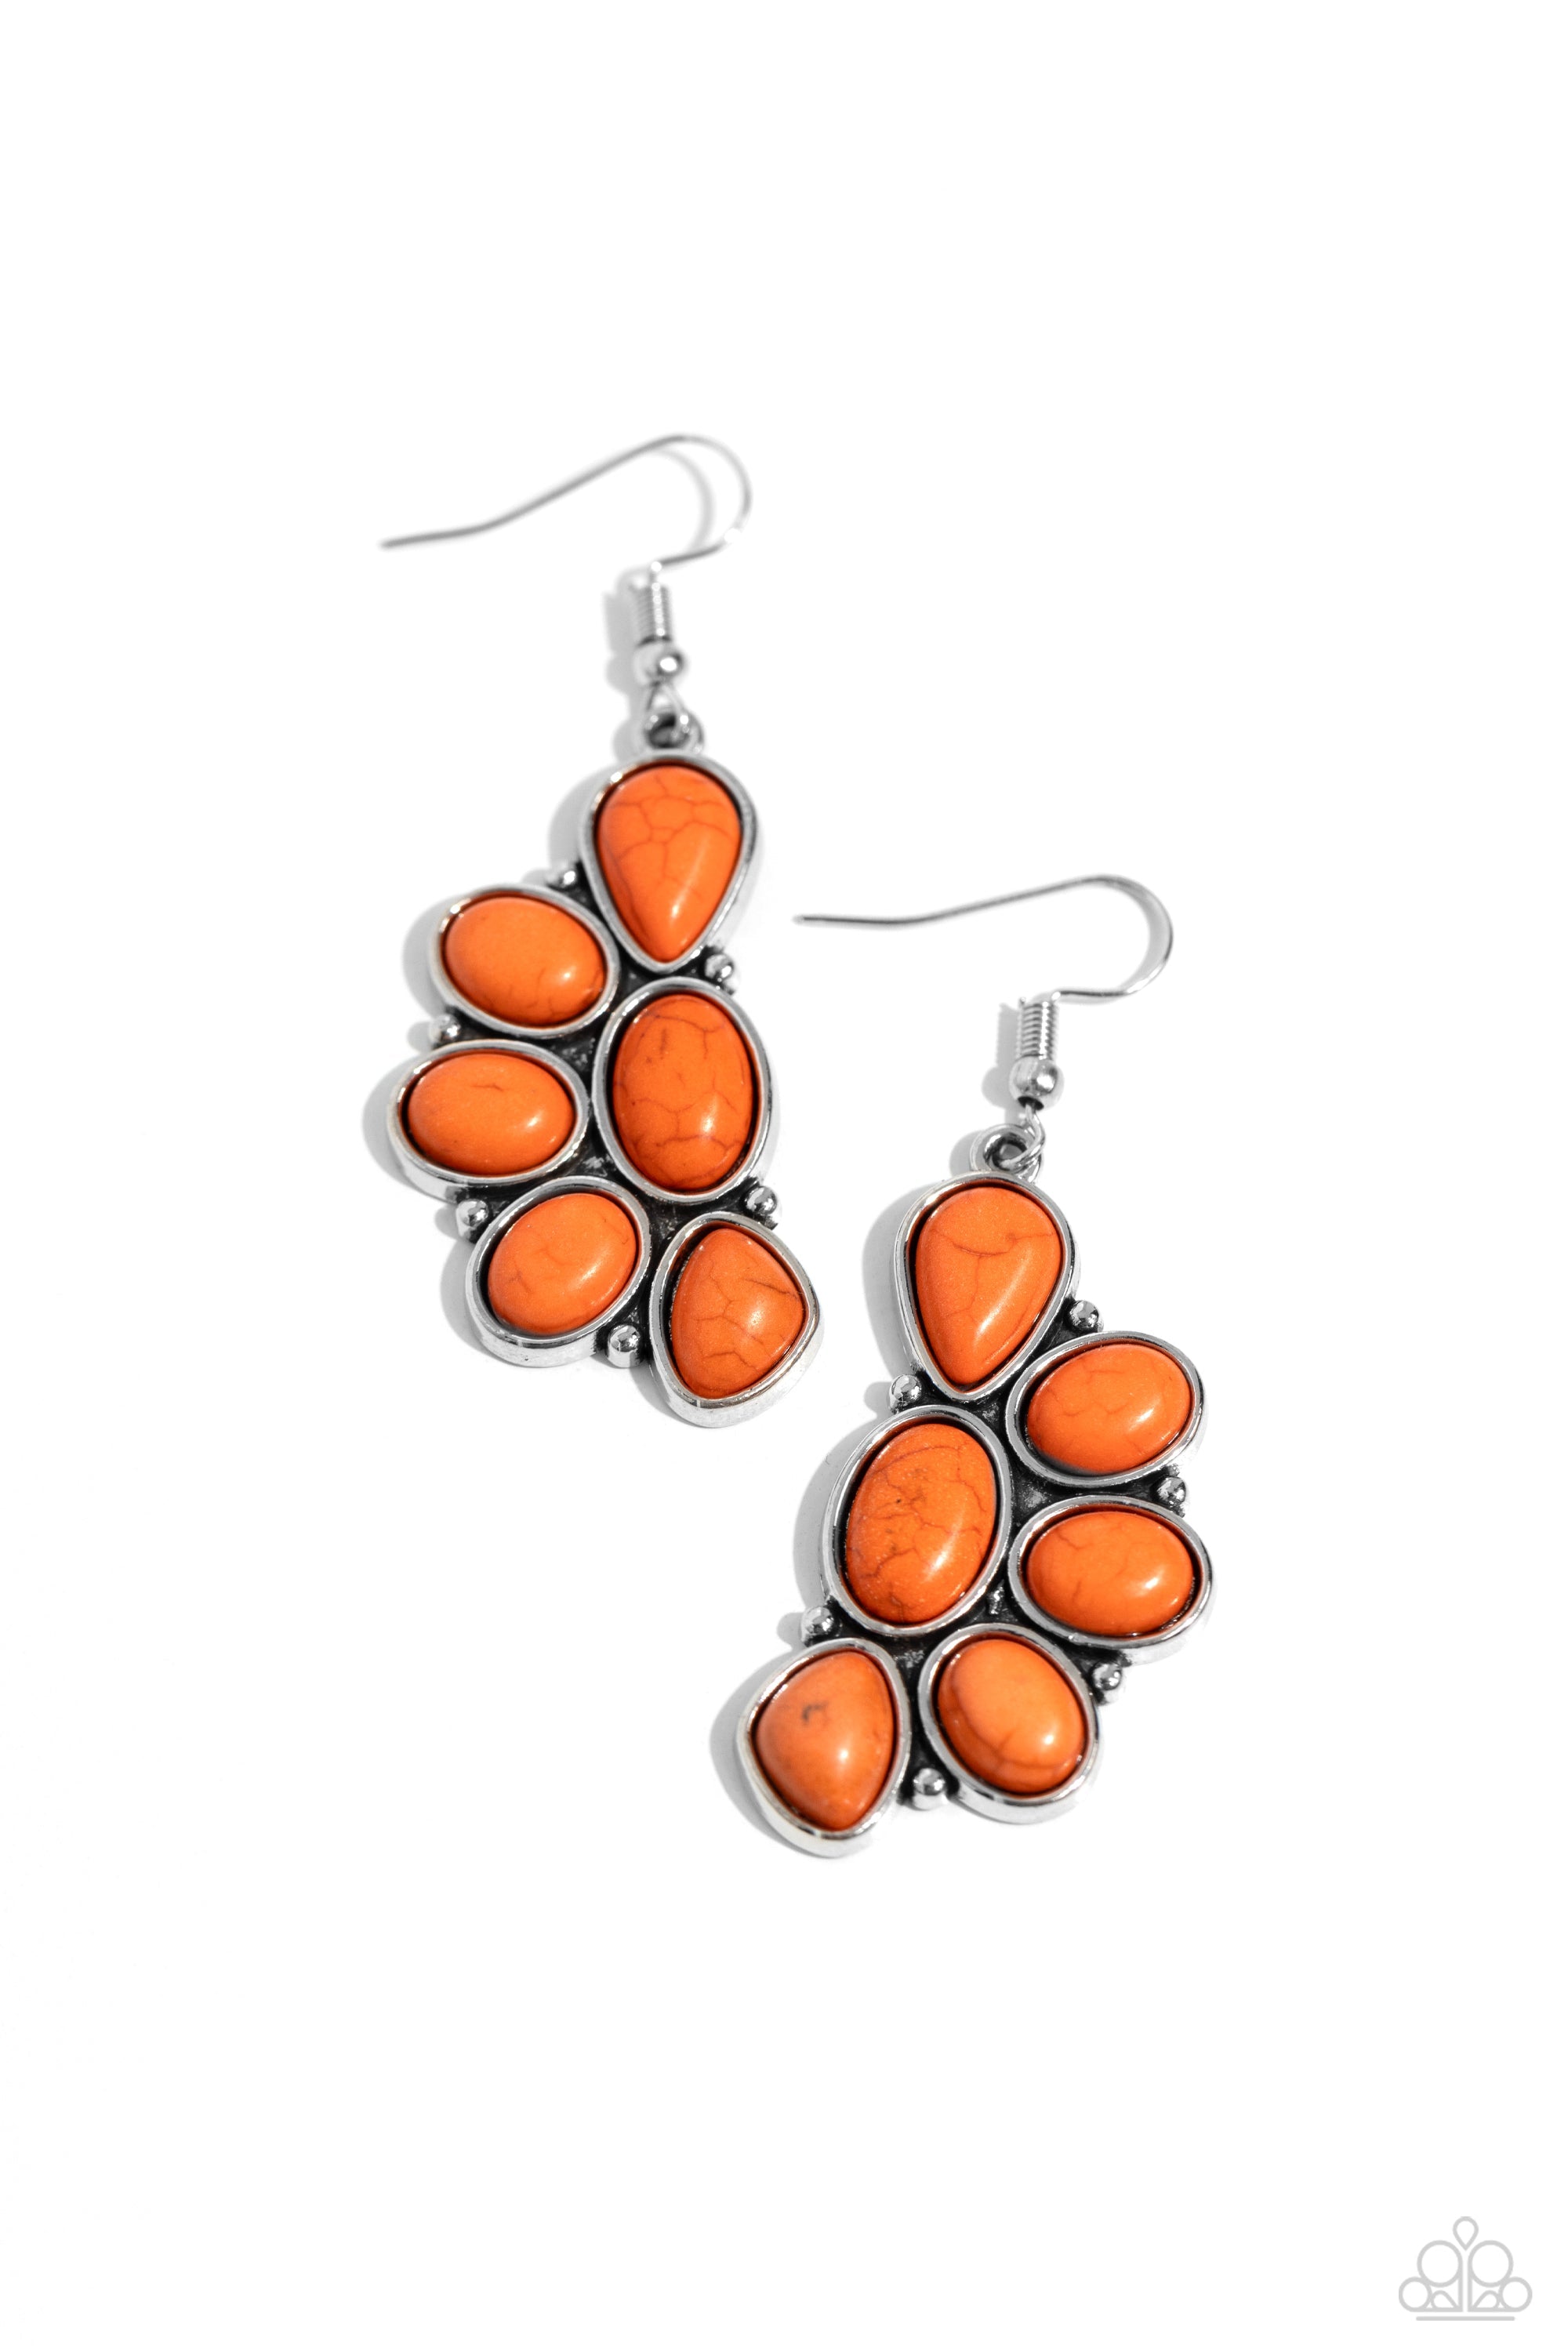 Havasu Hideaway Orange Stone Earrings - Paparazzi Accessories- lightbox - CarasShop.com - $5 Jewelry by Cara Jewels